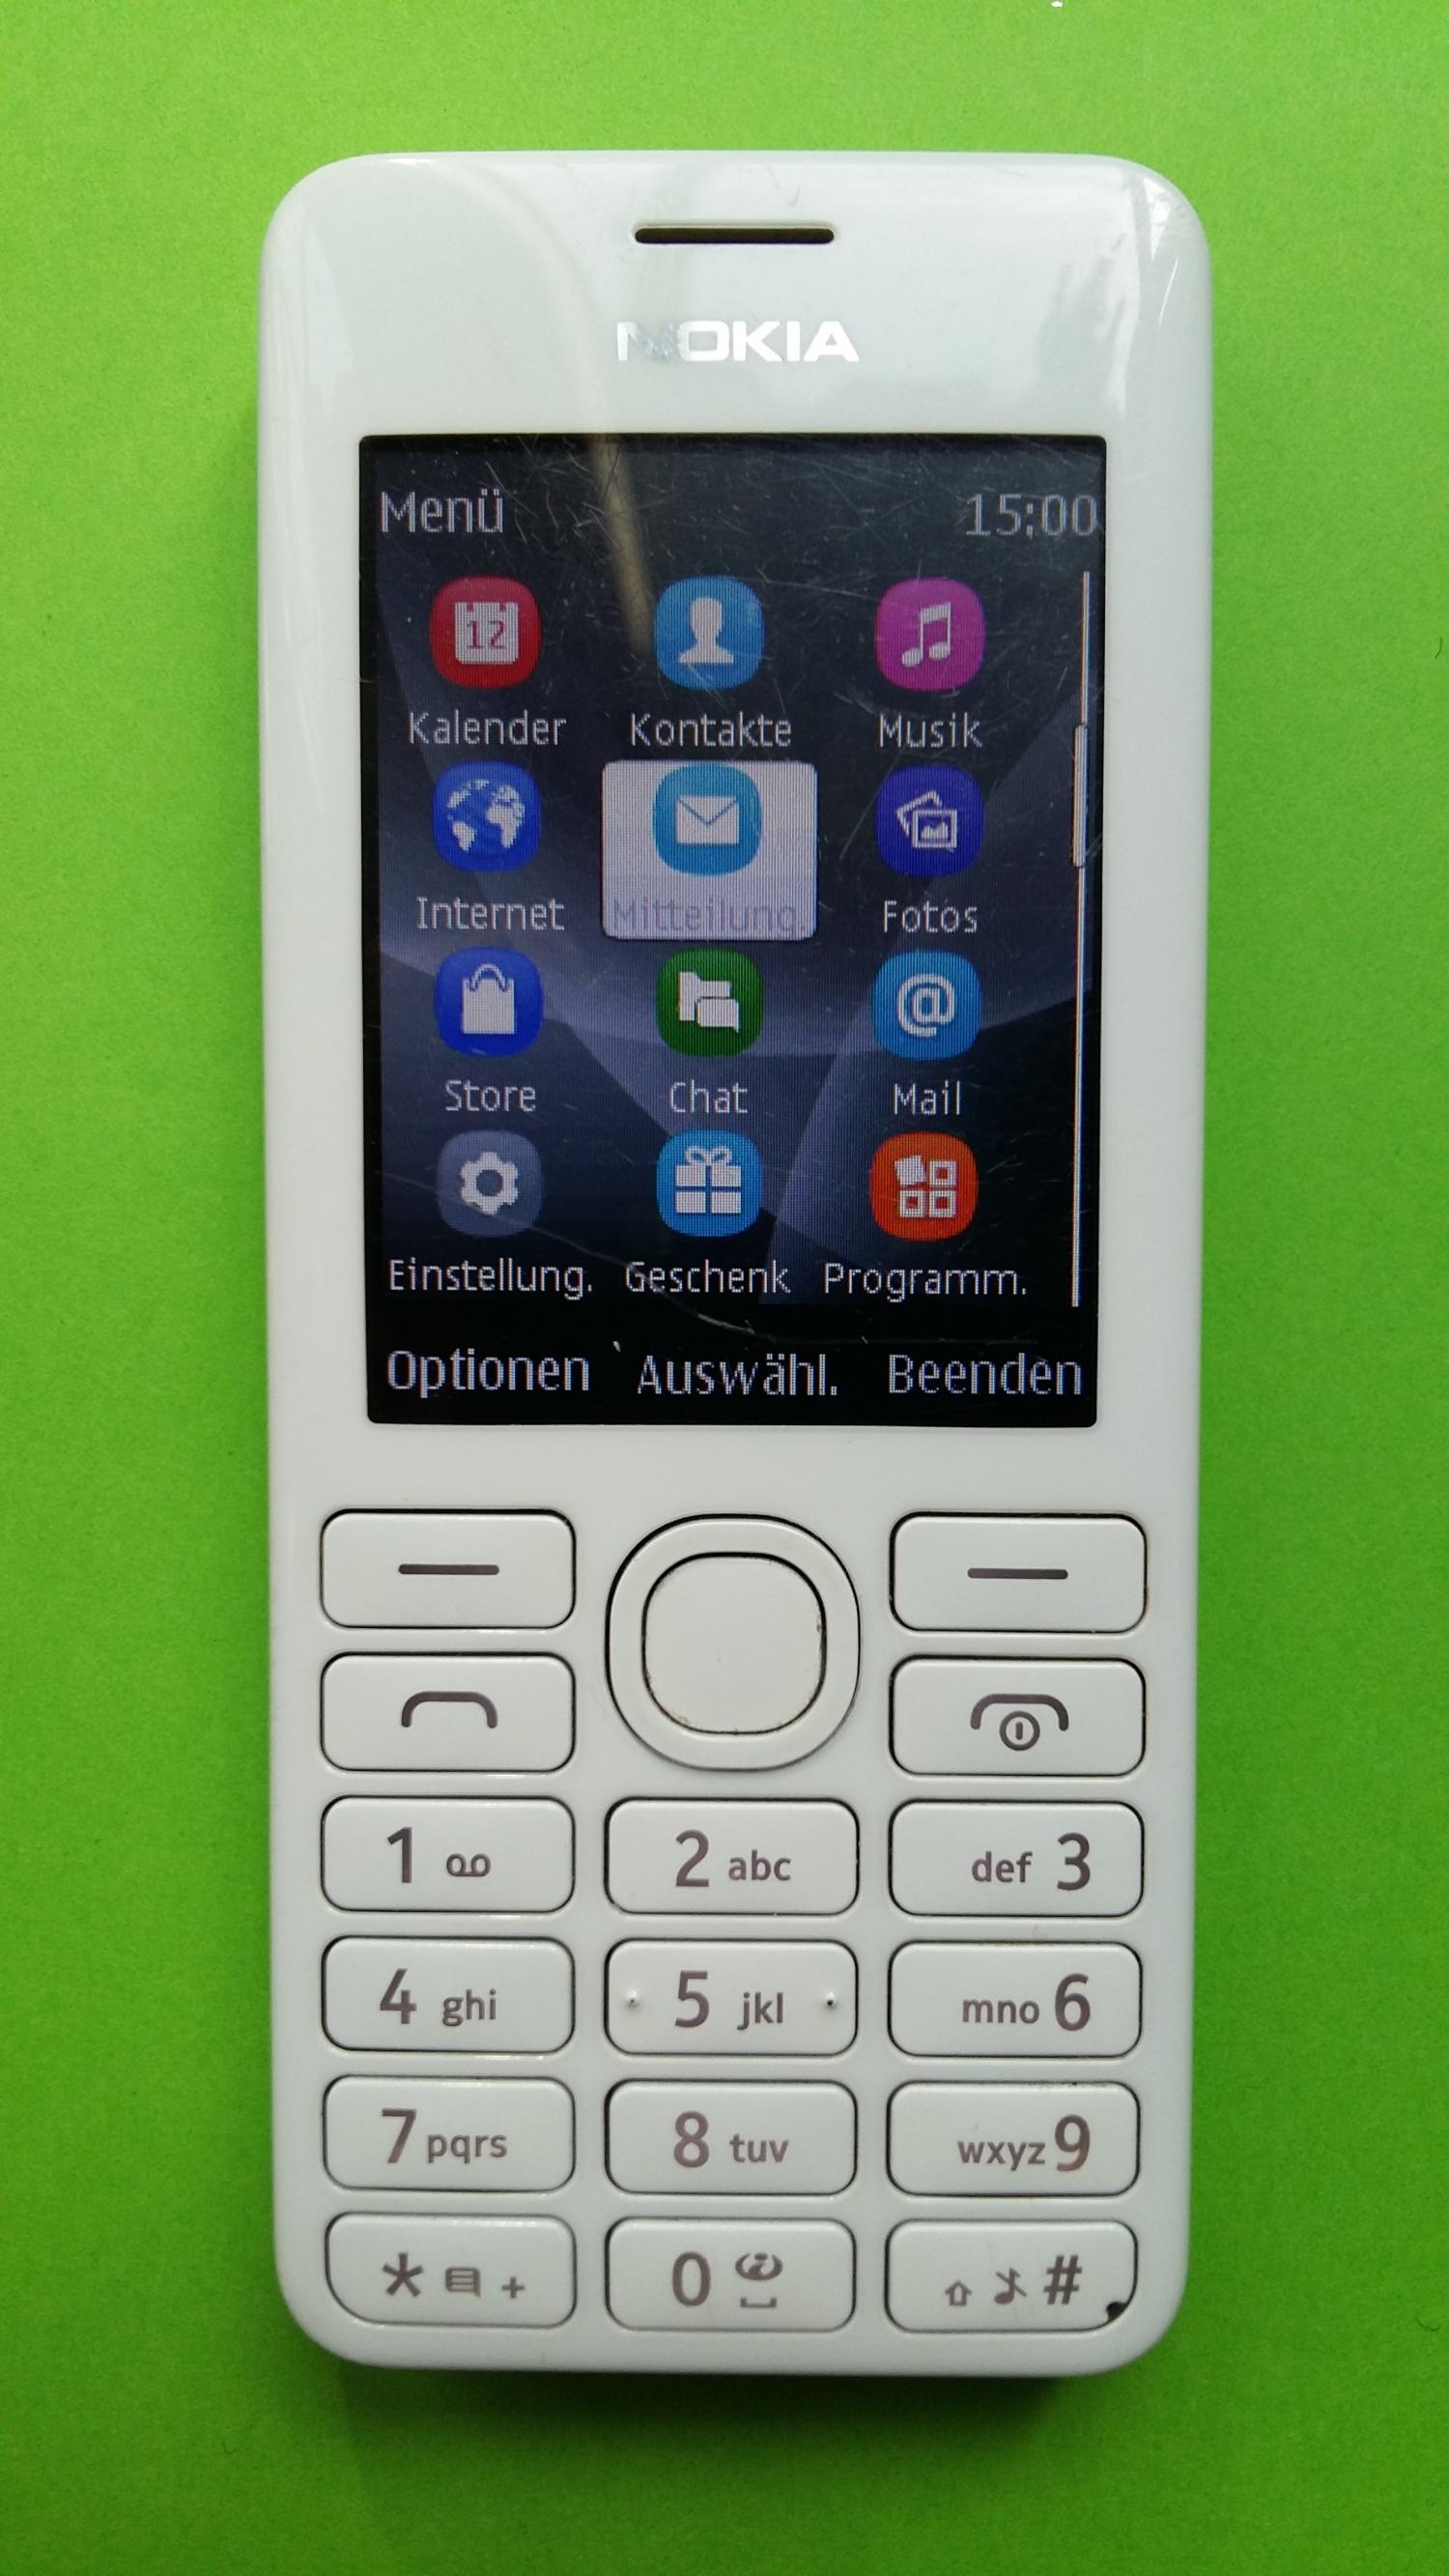 image-7299932-Nokia 206.1 Asha (2)1.jpg